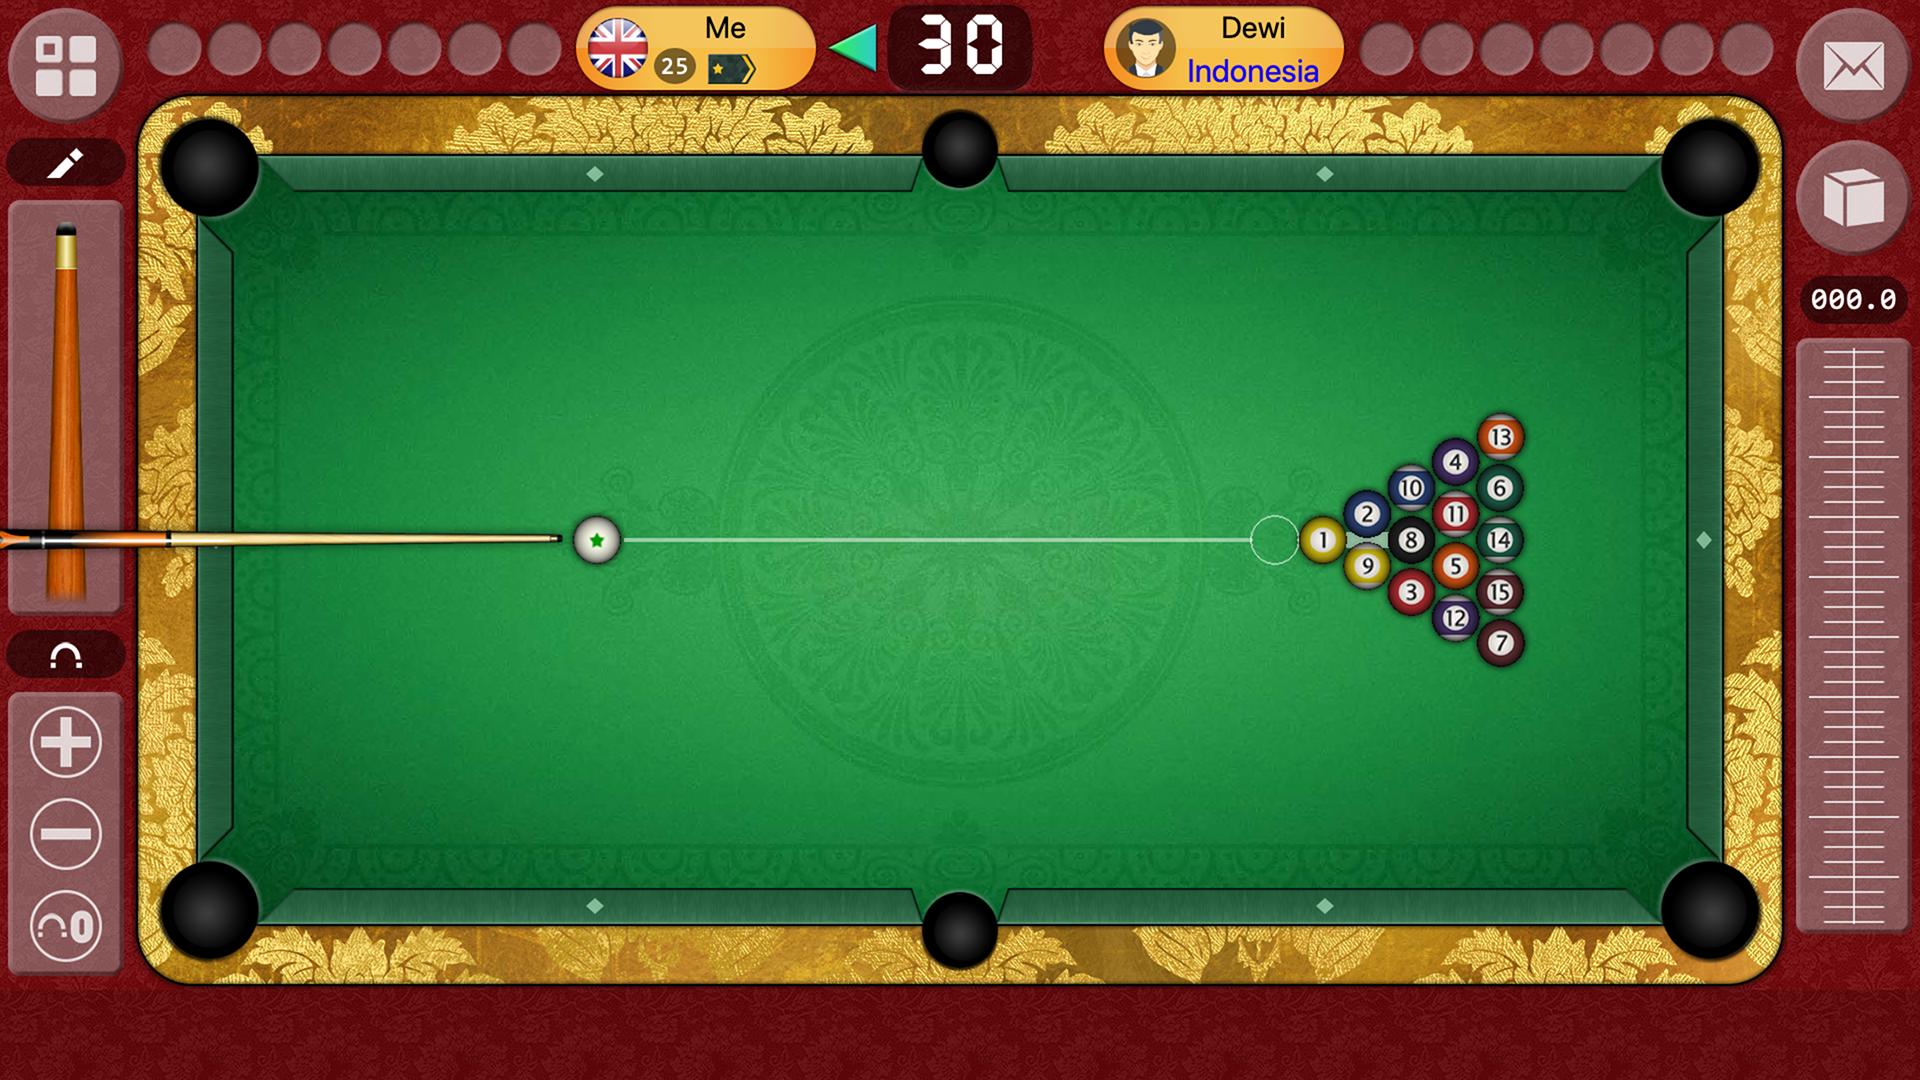 ðŸ”¥ free billiards / pool offline / 8 ball online for Android ... - 